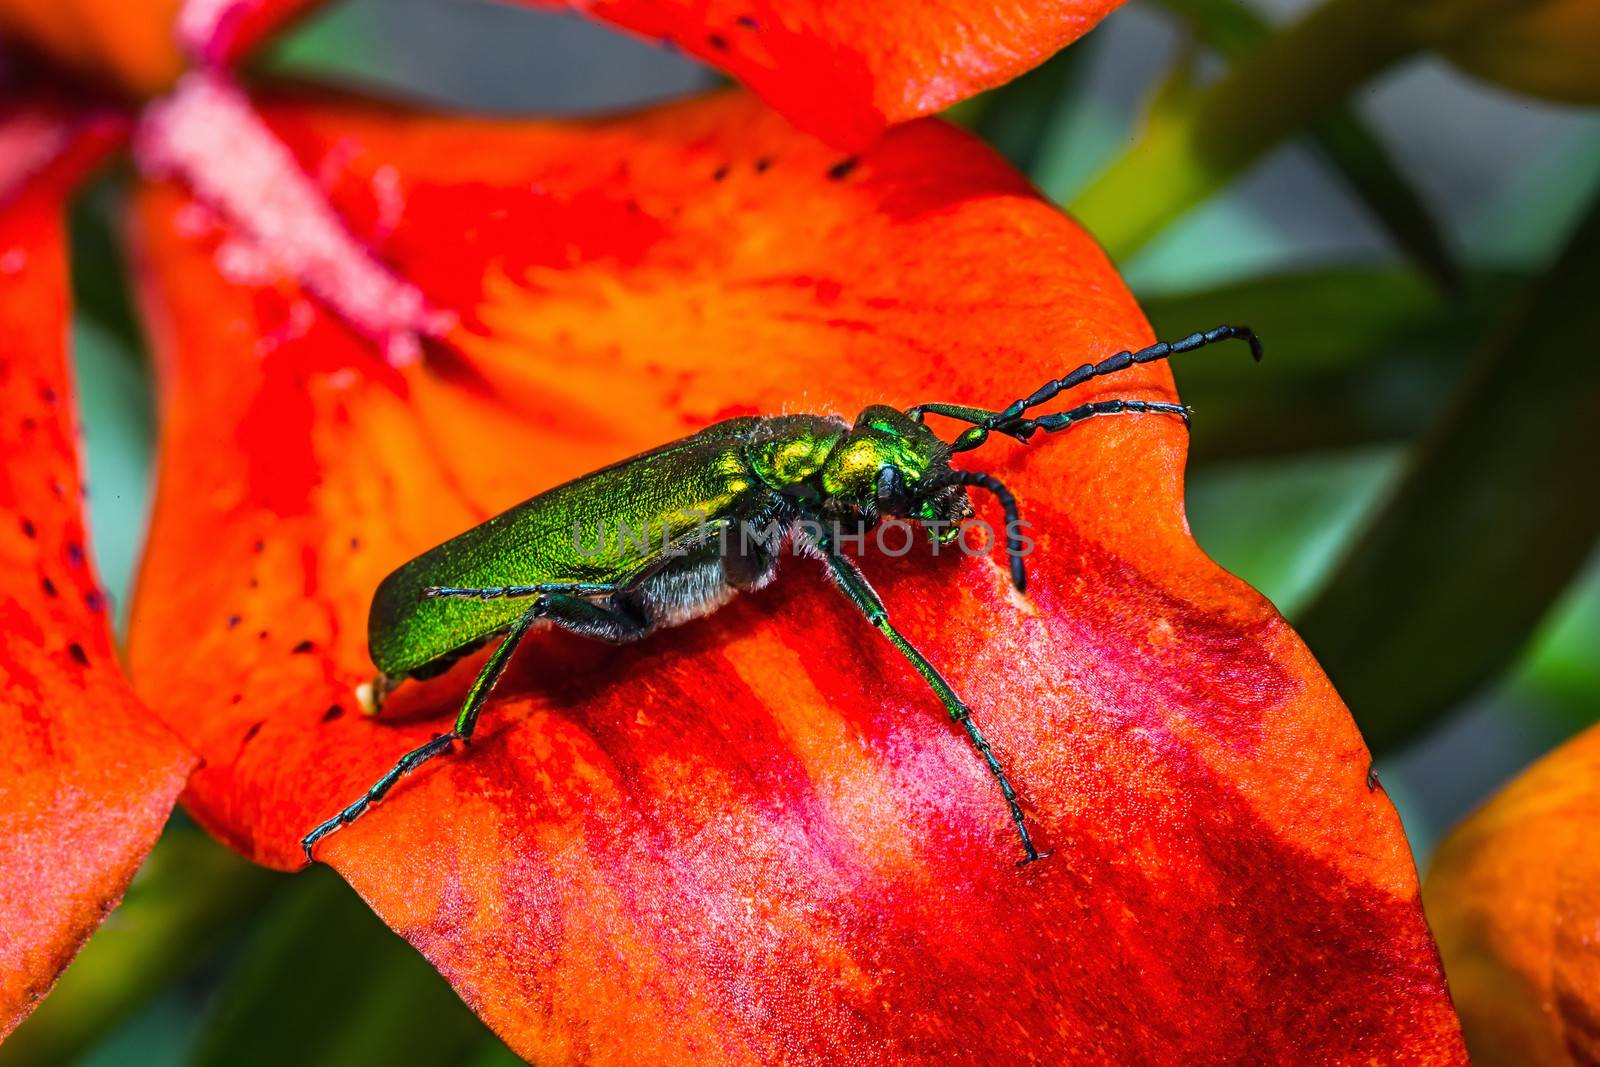 cantharis lytta vesicatoria, green beetle on a flower